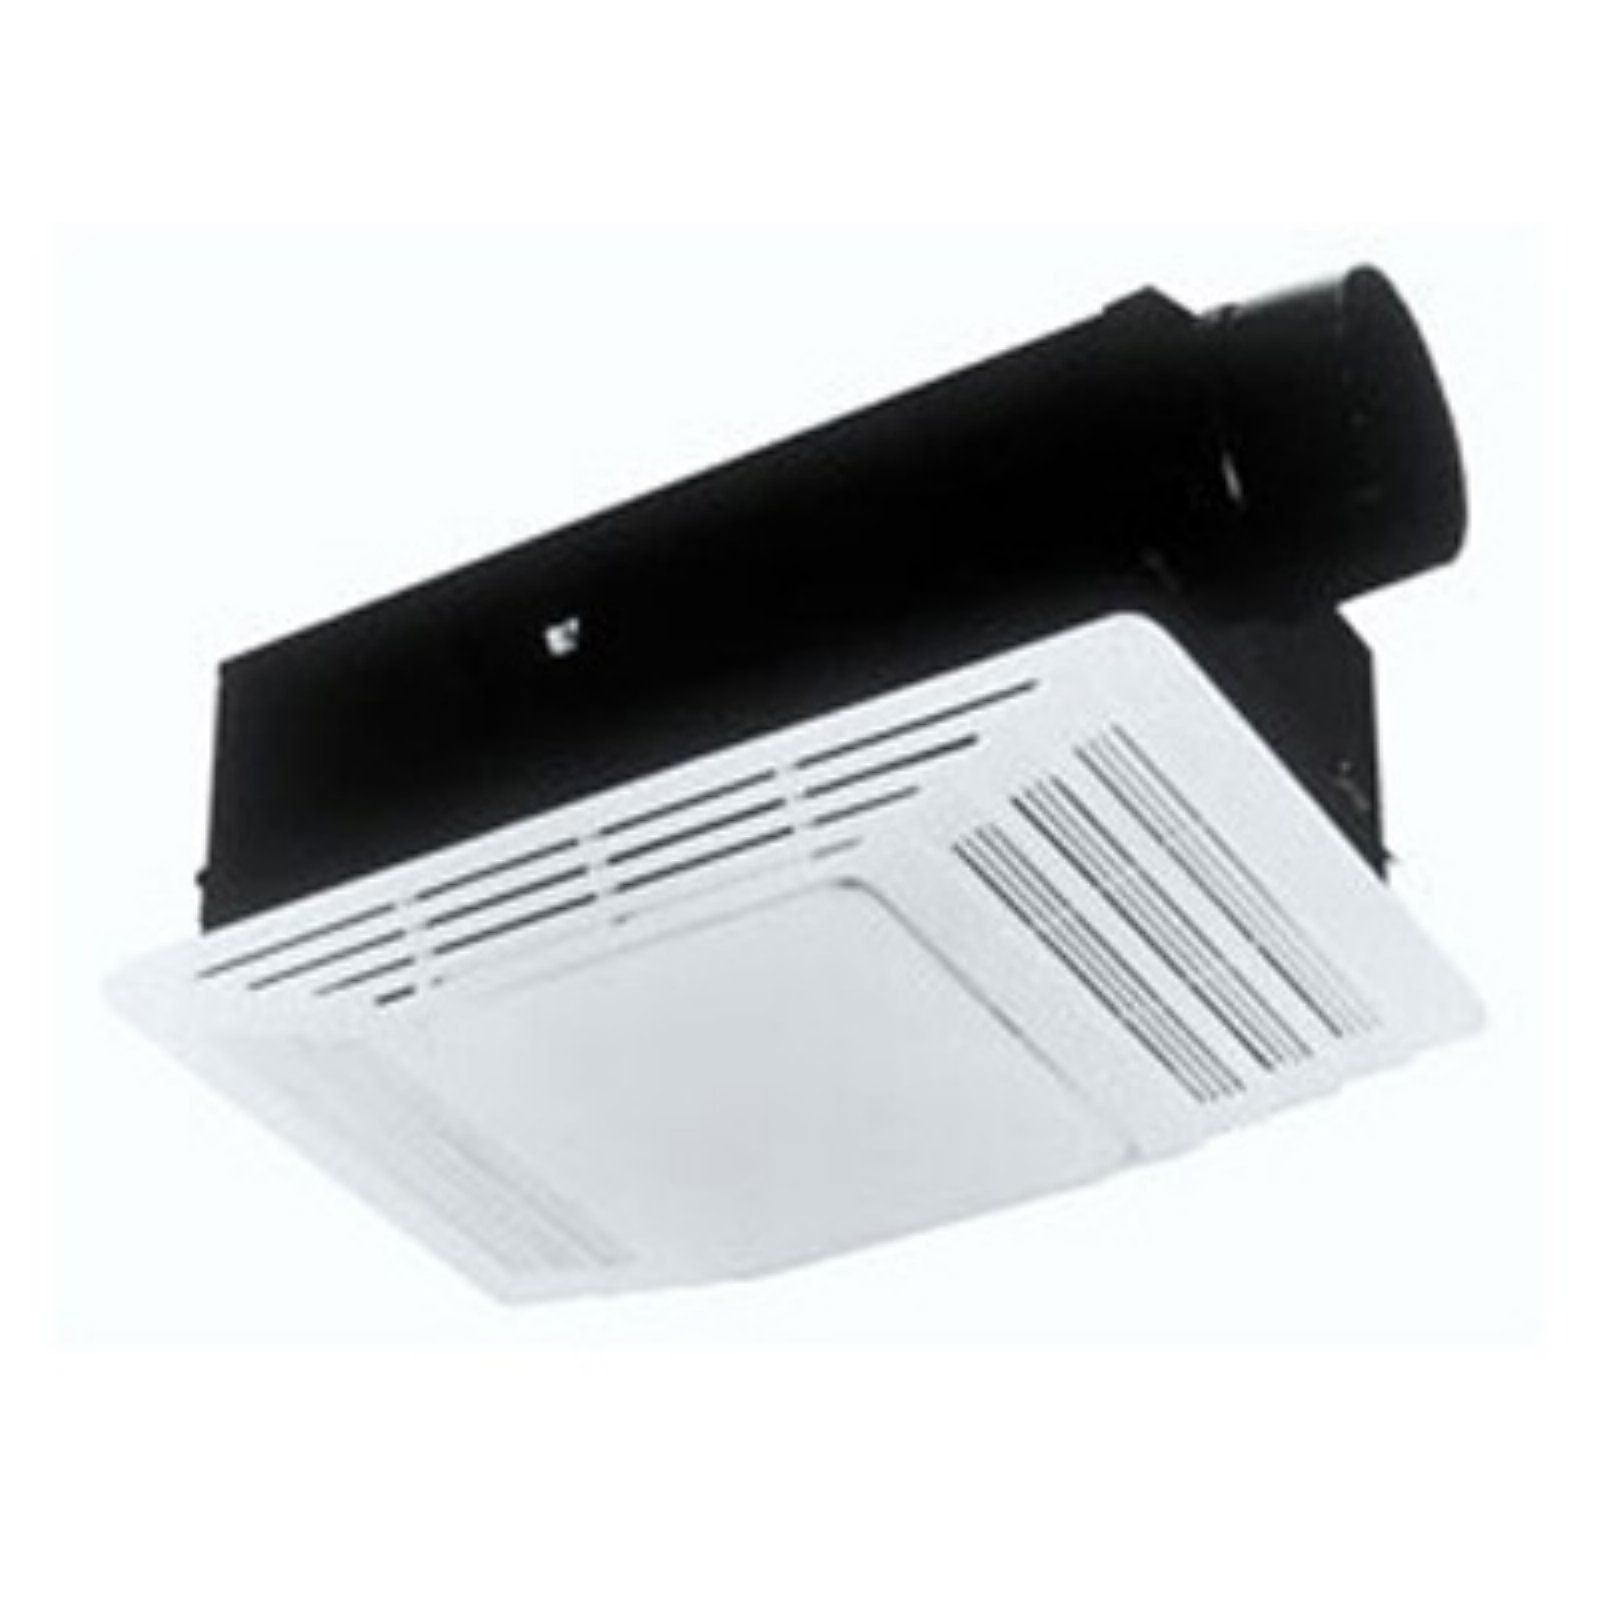 Broan Nutone 655 Bathroom Heat Fan Light Products In throughout dimensions 1600 X 1600